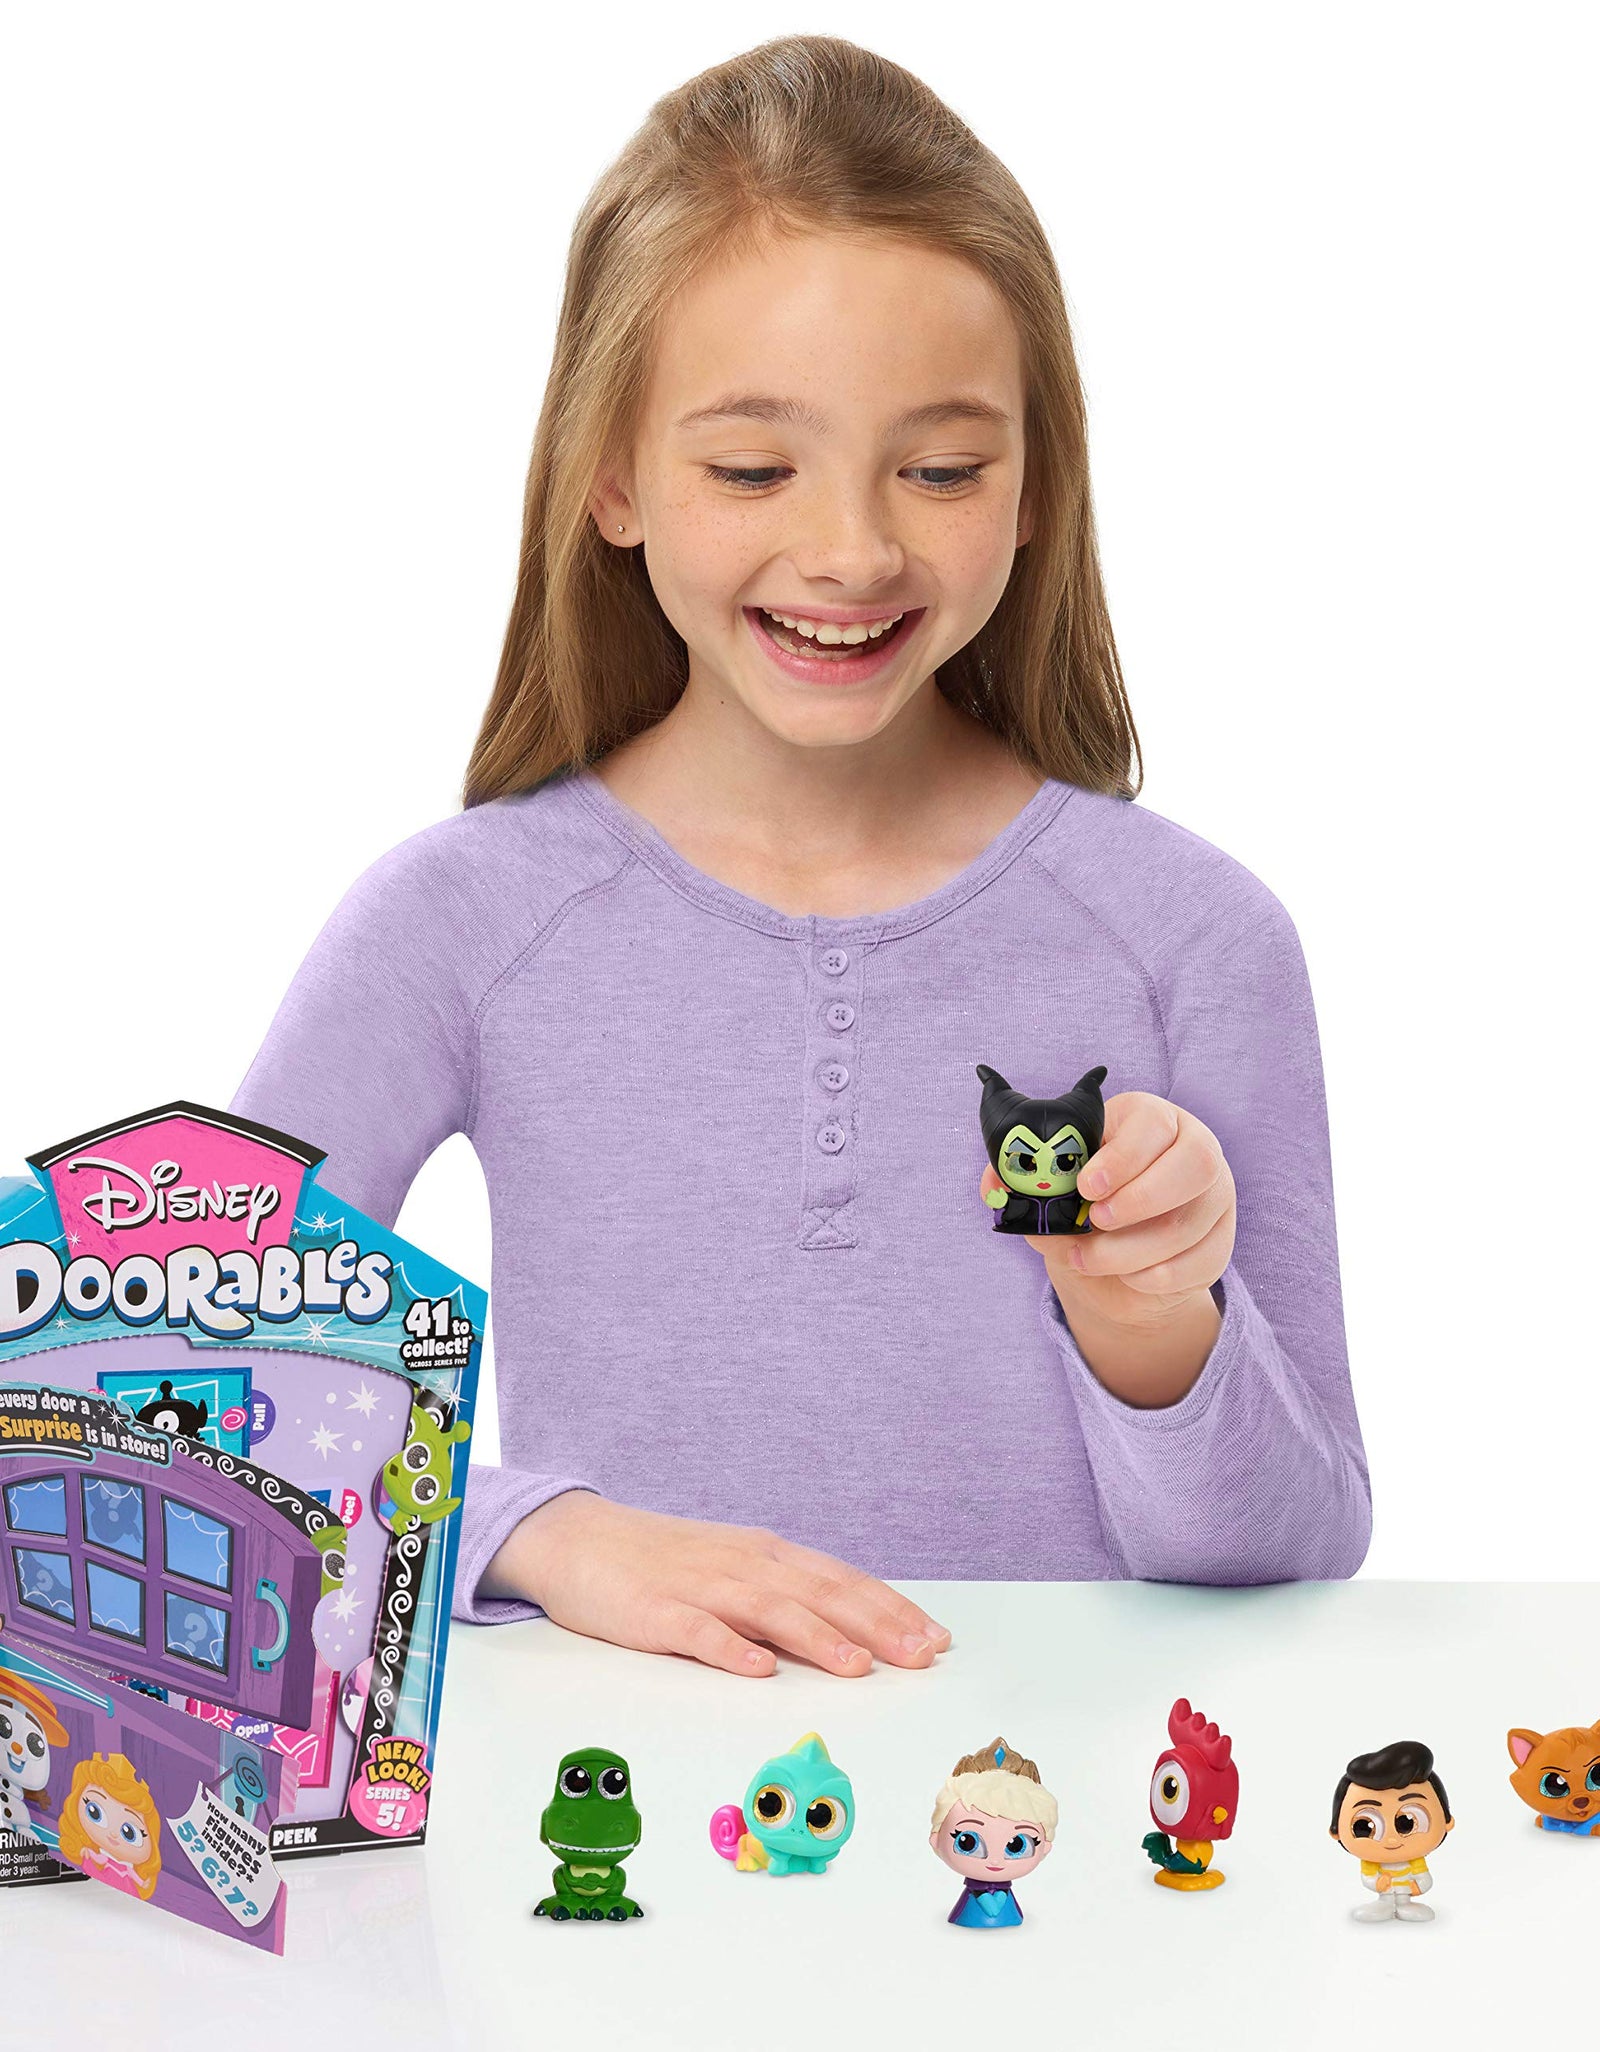 Disney Doorables Multi-Peek Pack Series 5, Collectible Mini Figures, Styles May Vary, by Just Play